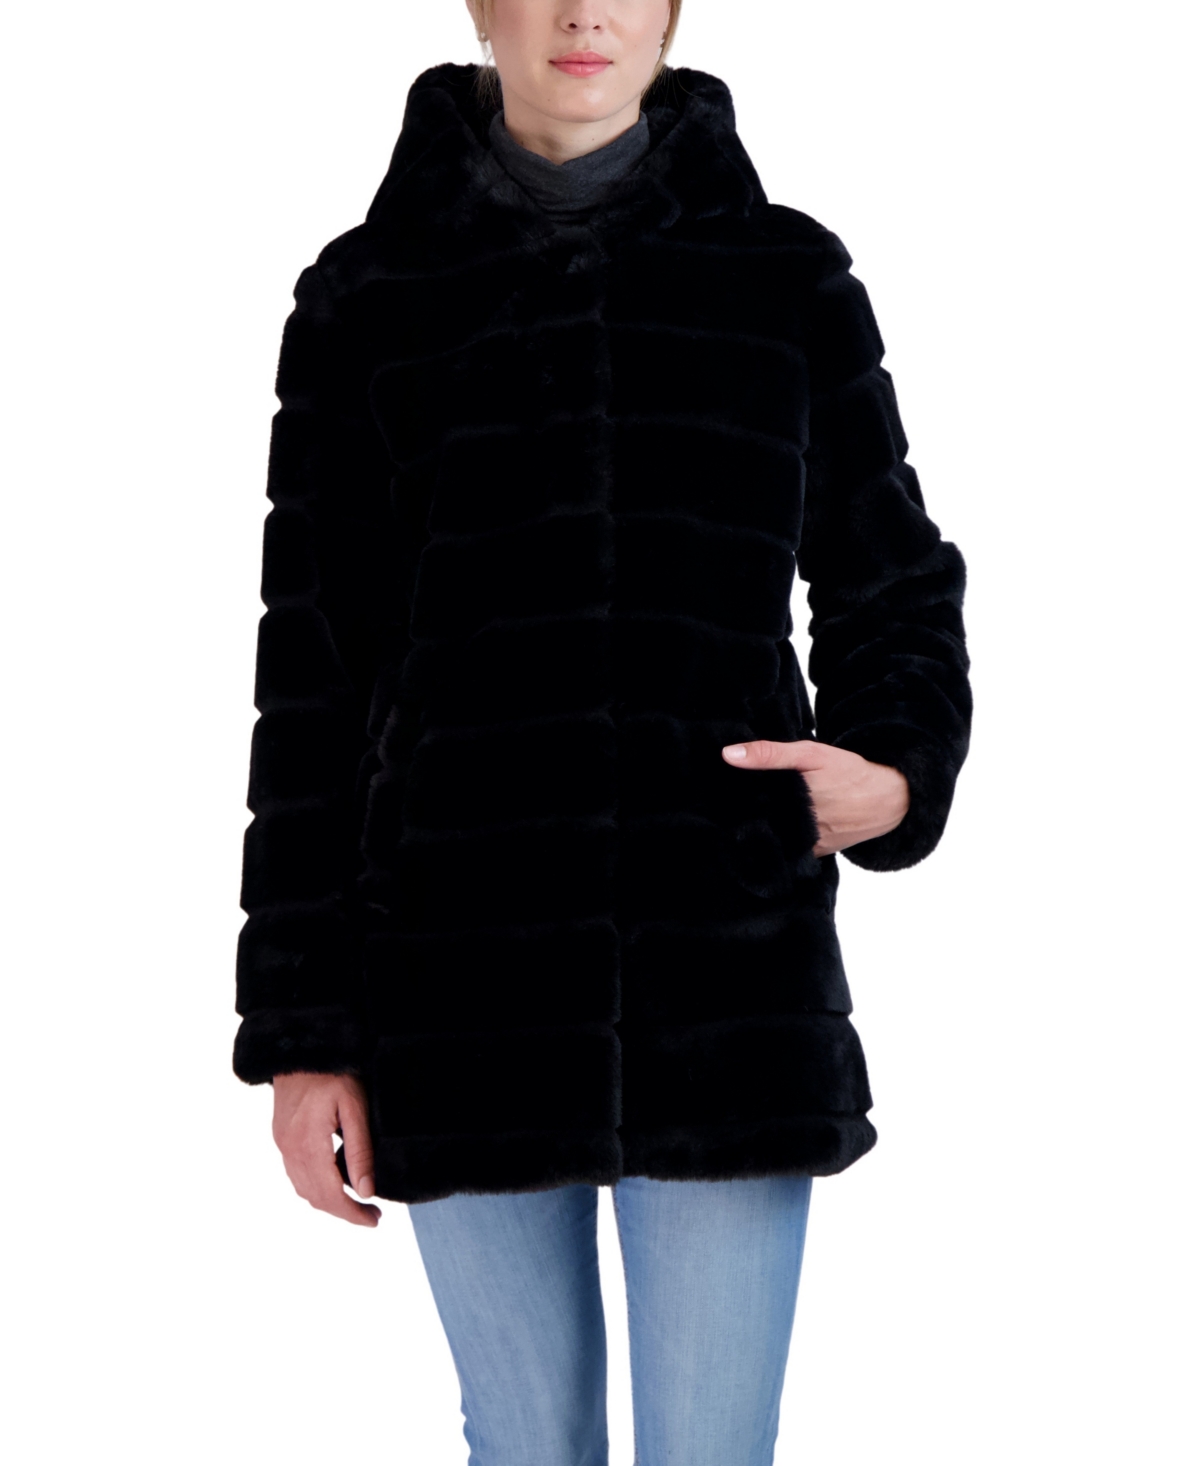 Women's Hooded Grooved Faux Fur Coat - Black